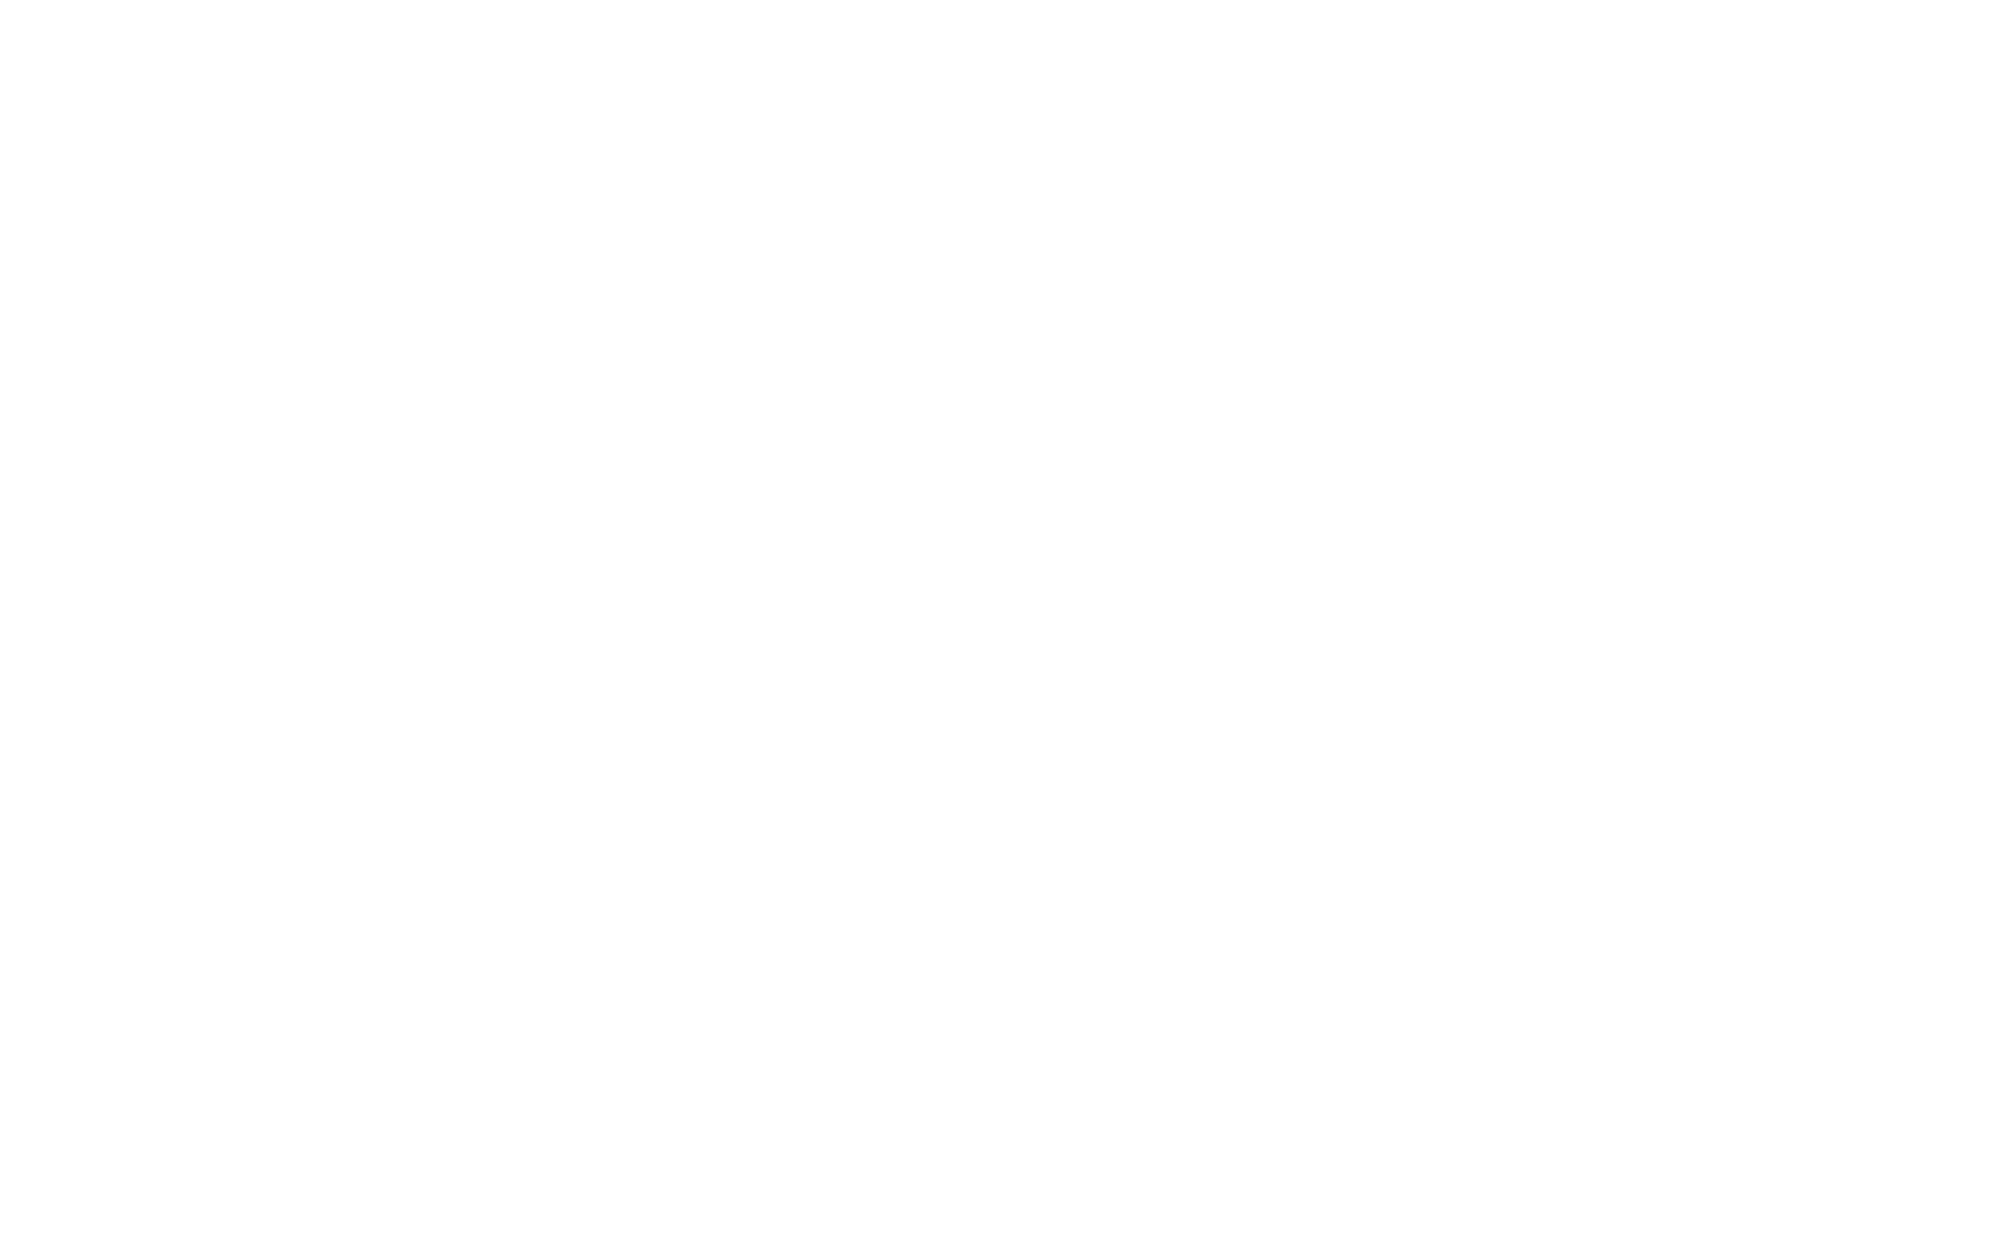 hampstead-locksmiths-ltd-high-resolution-logo-white-transparent